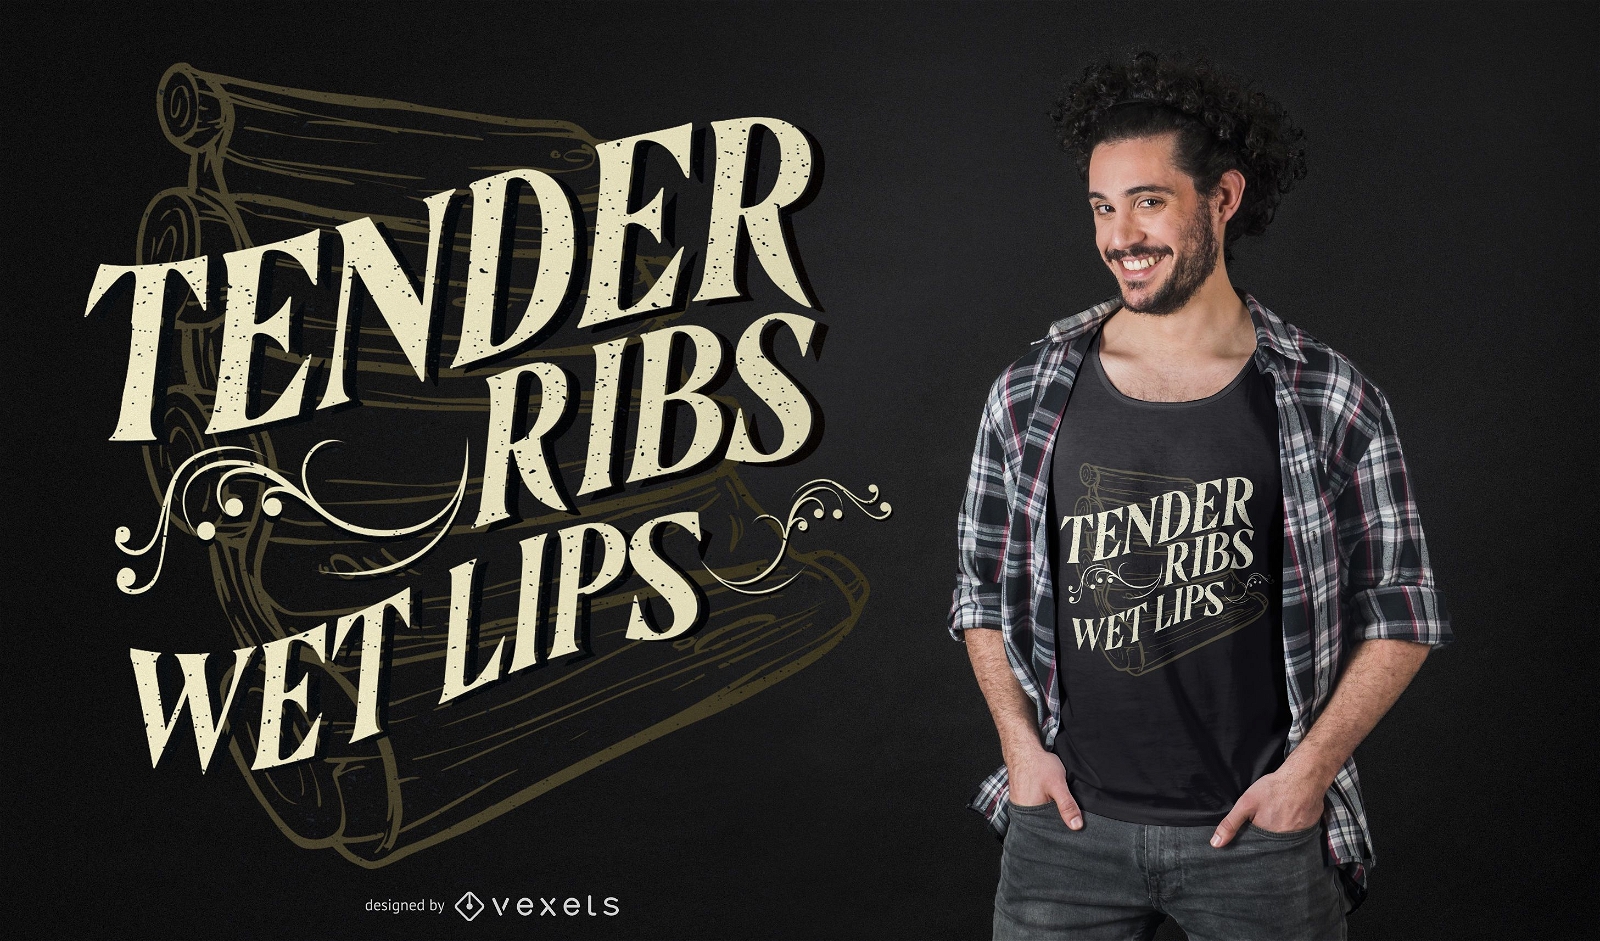 Tender ribs t-shirt design